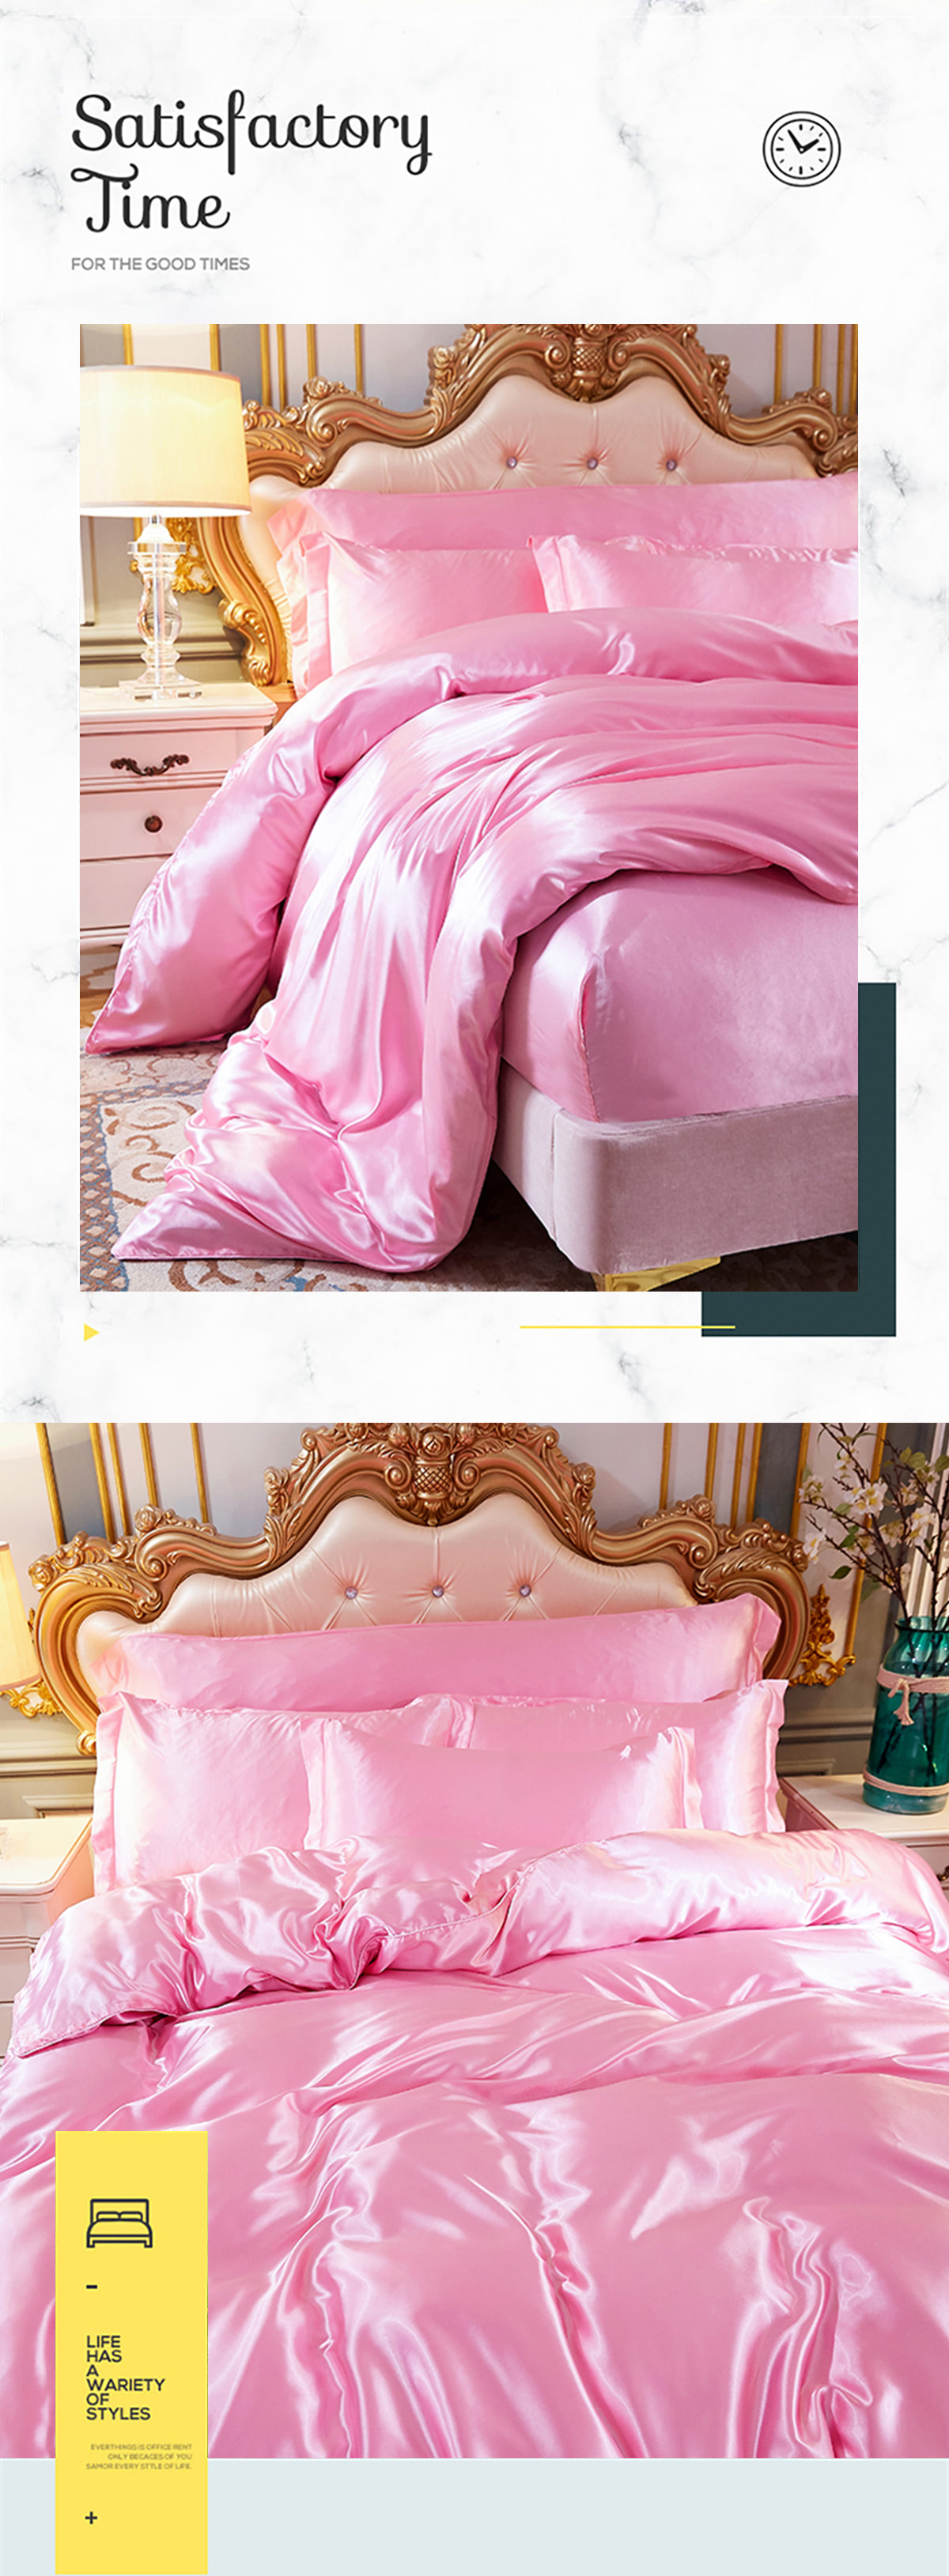 Home-Textile-Simple-Satin-Bedding-Set-Quilt-Cover-Pillowcases12.jpg